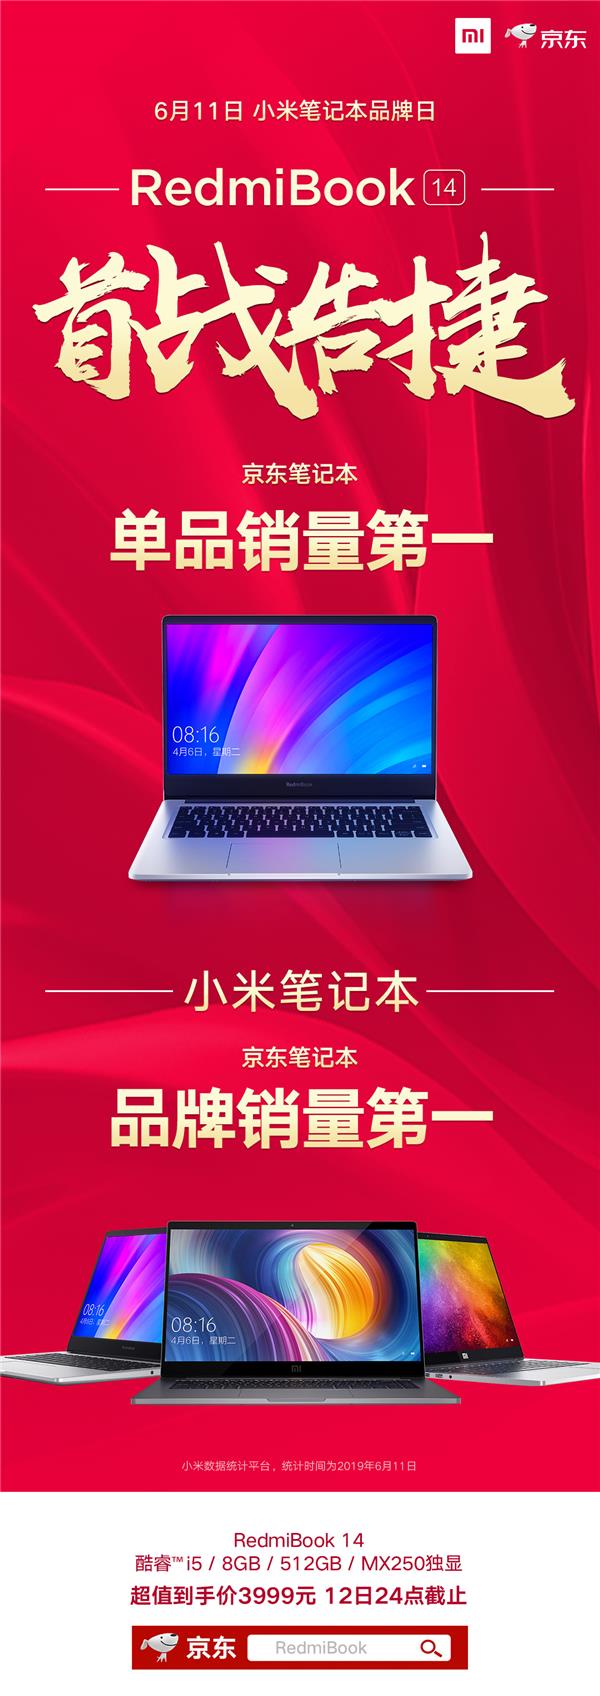 RedmiBook 14首卖斩获双冠王， 6月18日限时特惠3999元